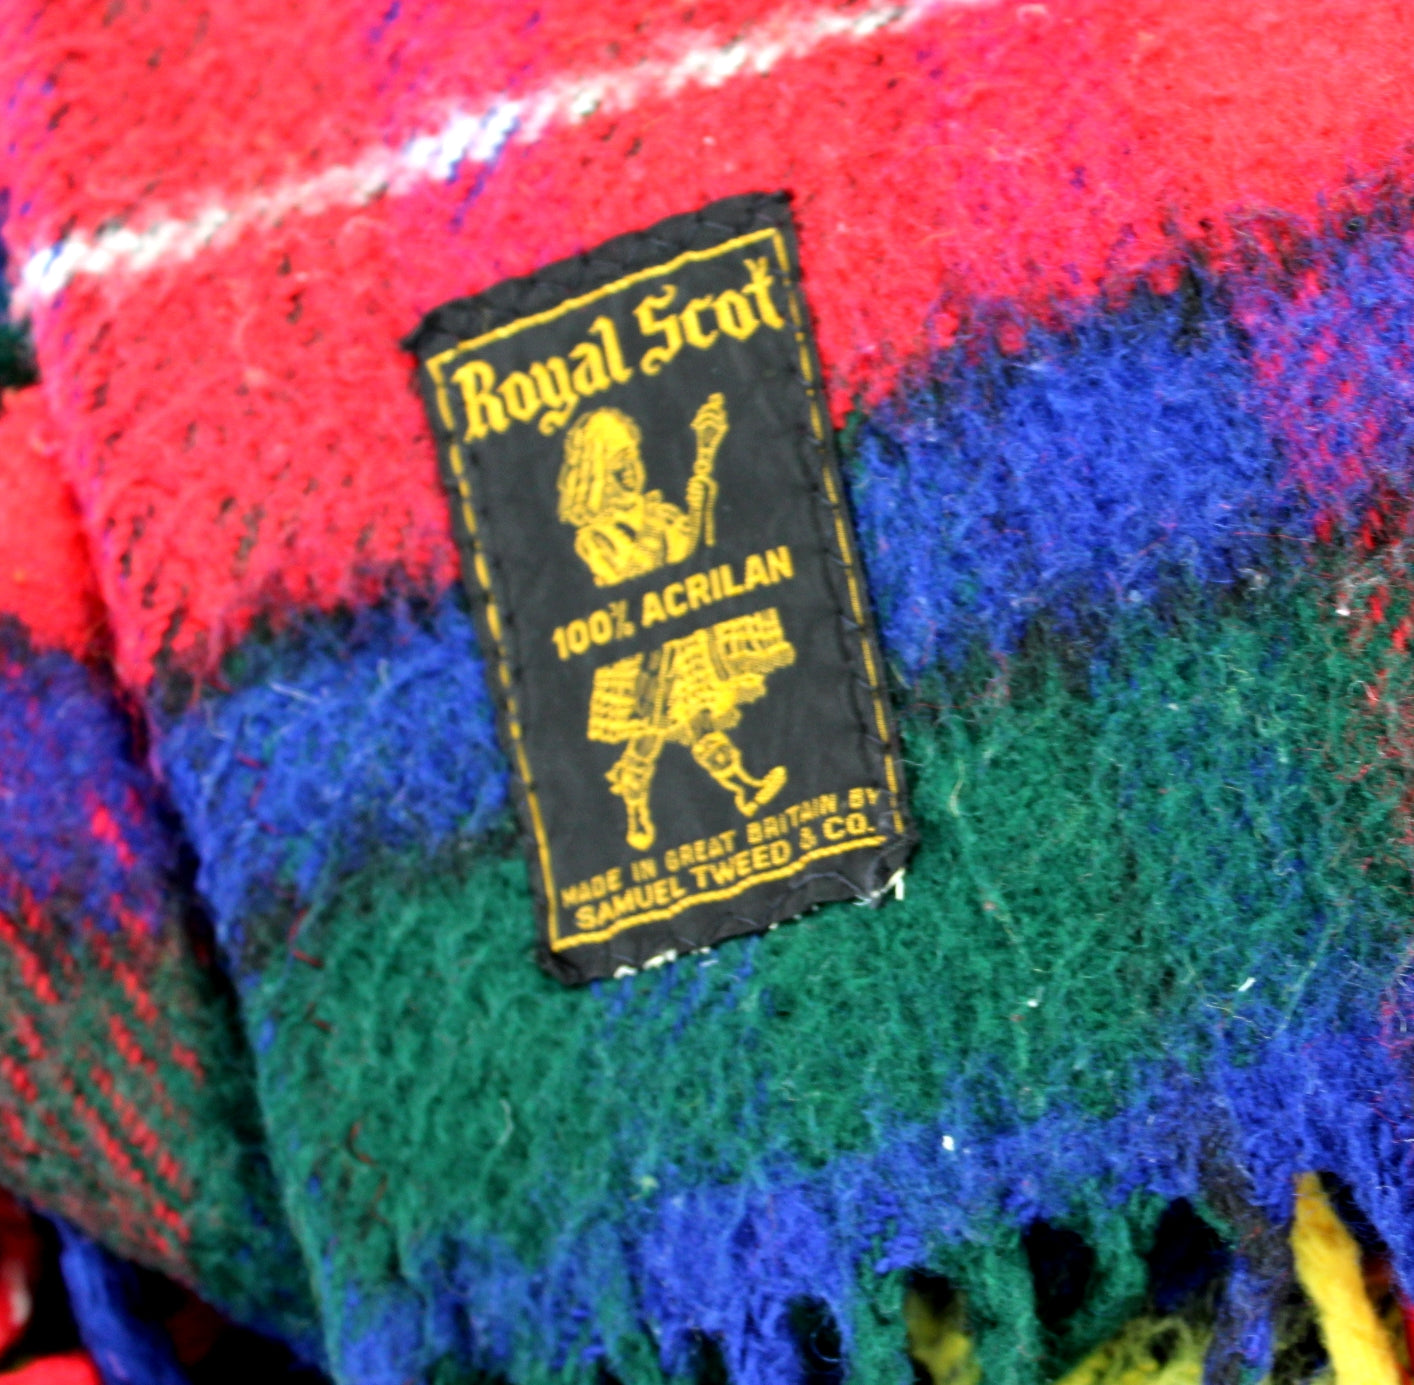 Samuel Tweed & Co Royal Scot Acrilan Throw Blanket - Primary Color Plaid cuddle blanket stadium blanket